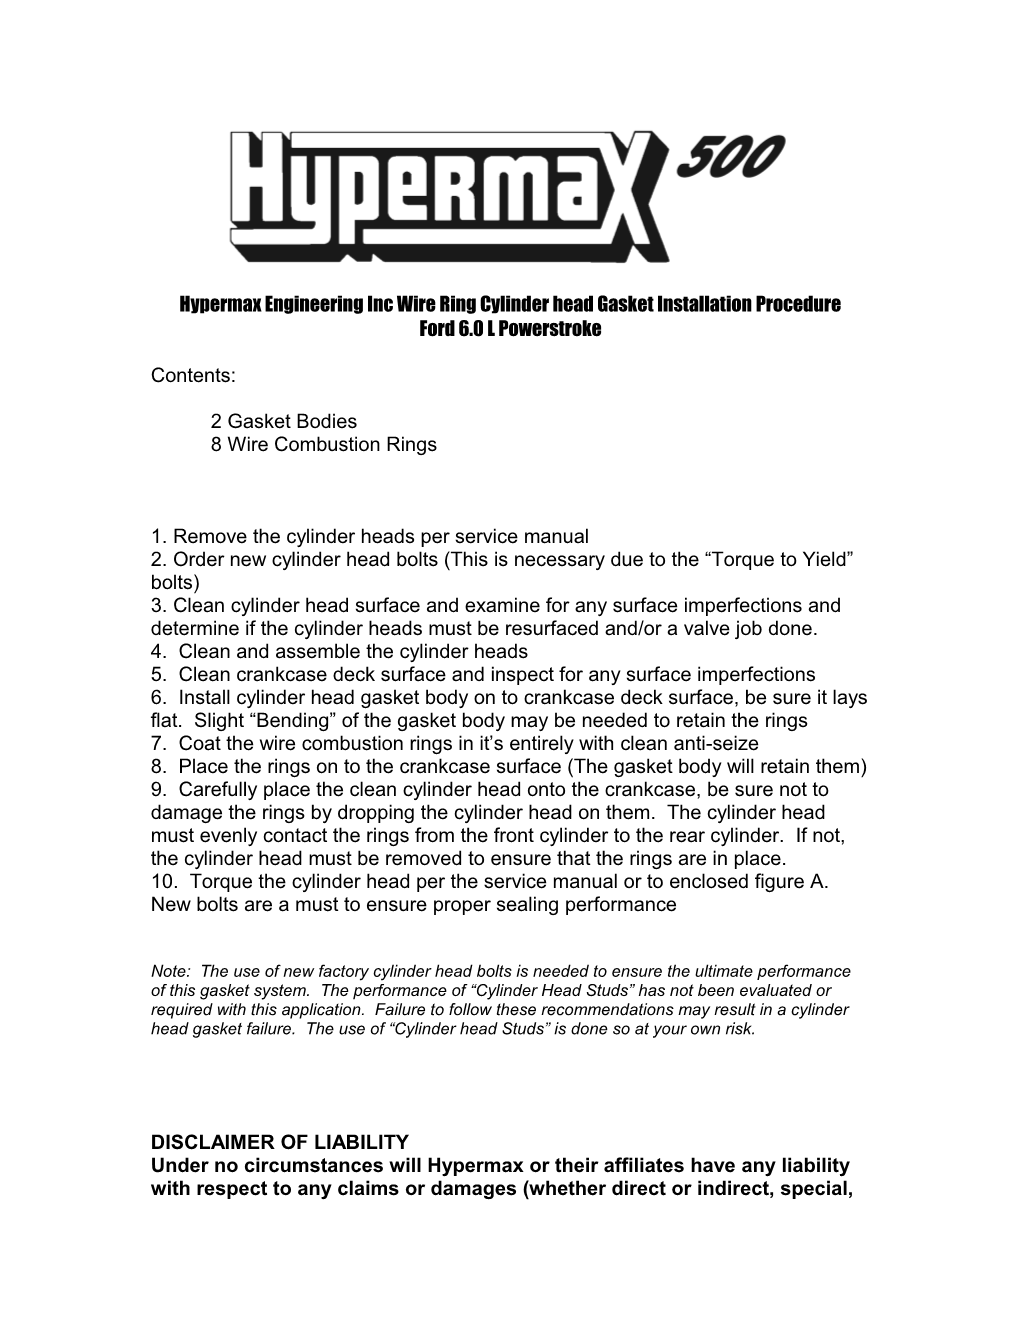 Hypermax Engineering Inc Wire Ringcylinder Head Gasket Installation Procedure